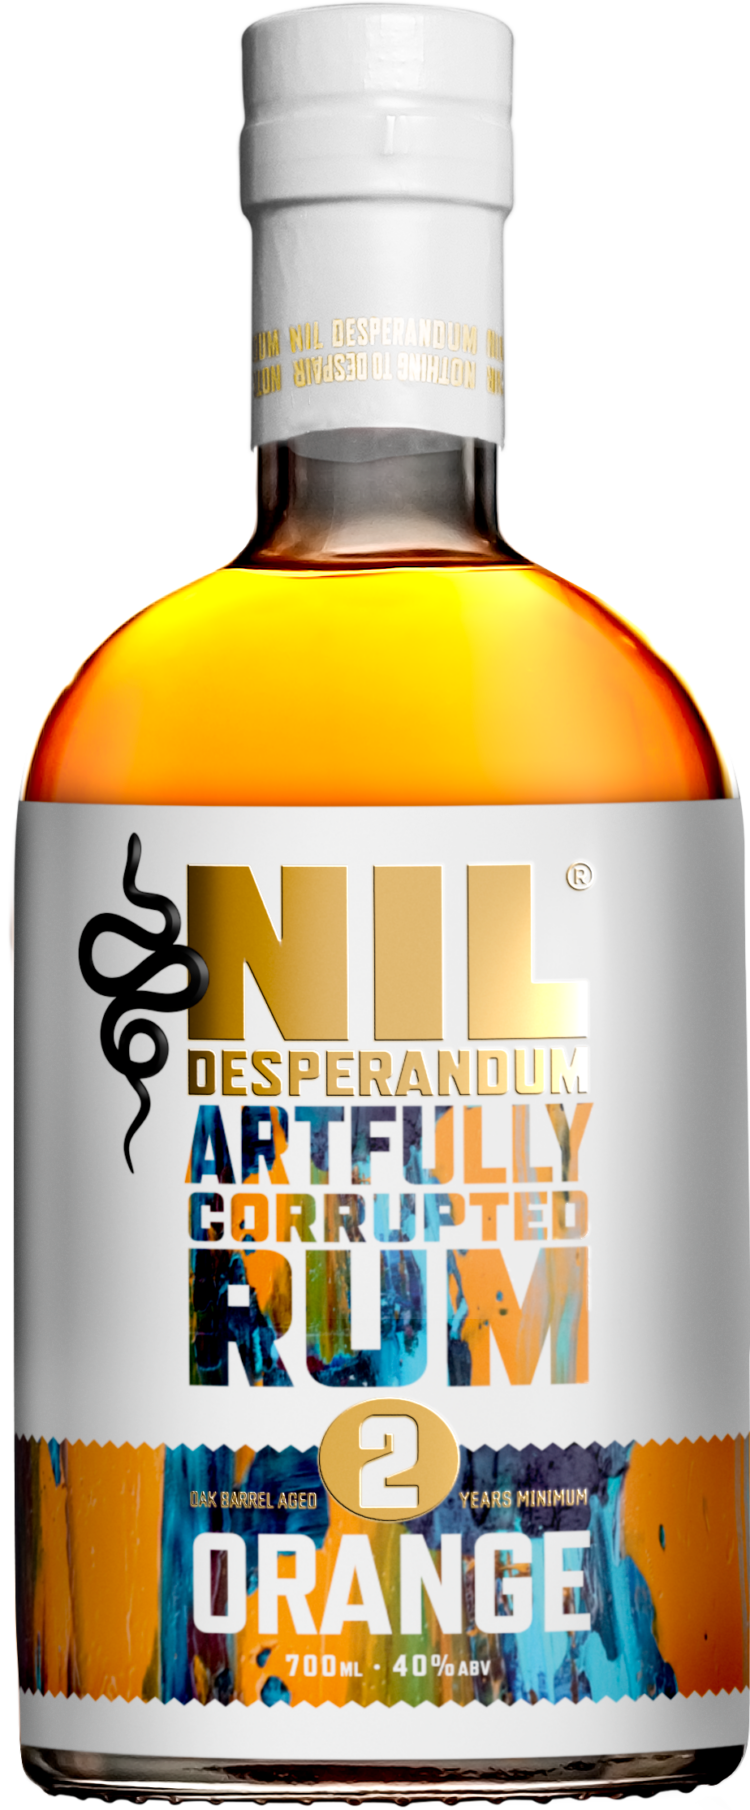 Artfully Corrupted Orange Rum